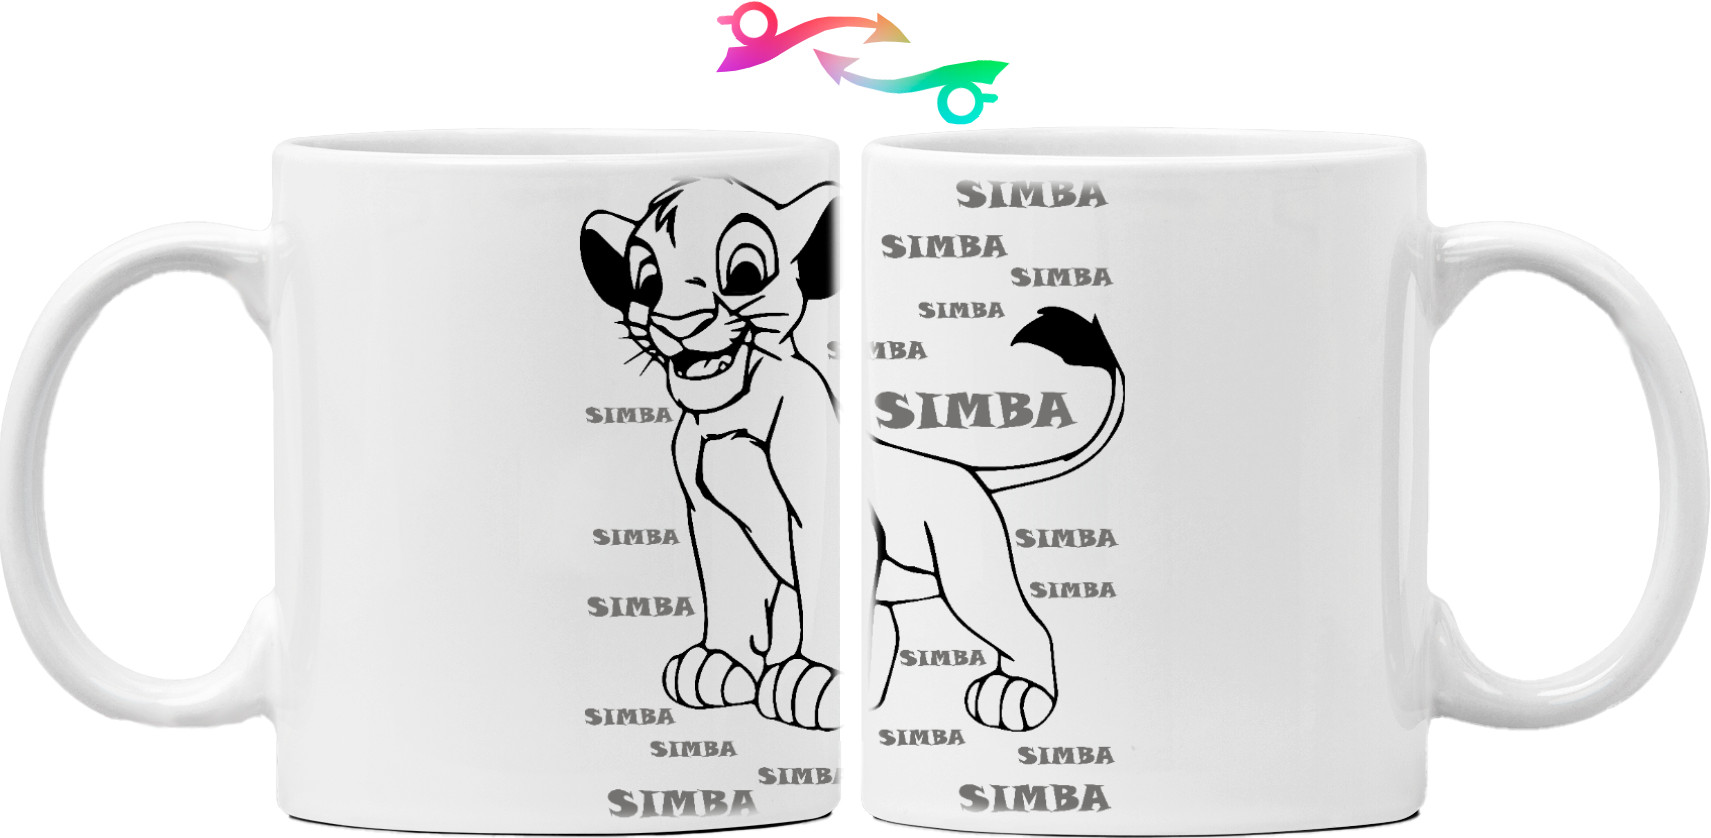 Simba2